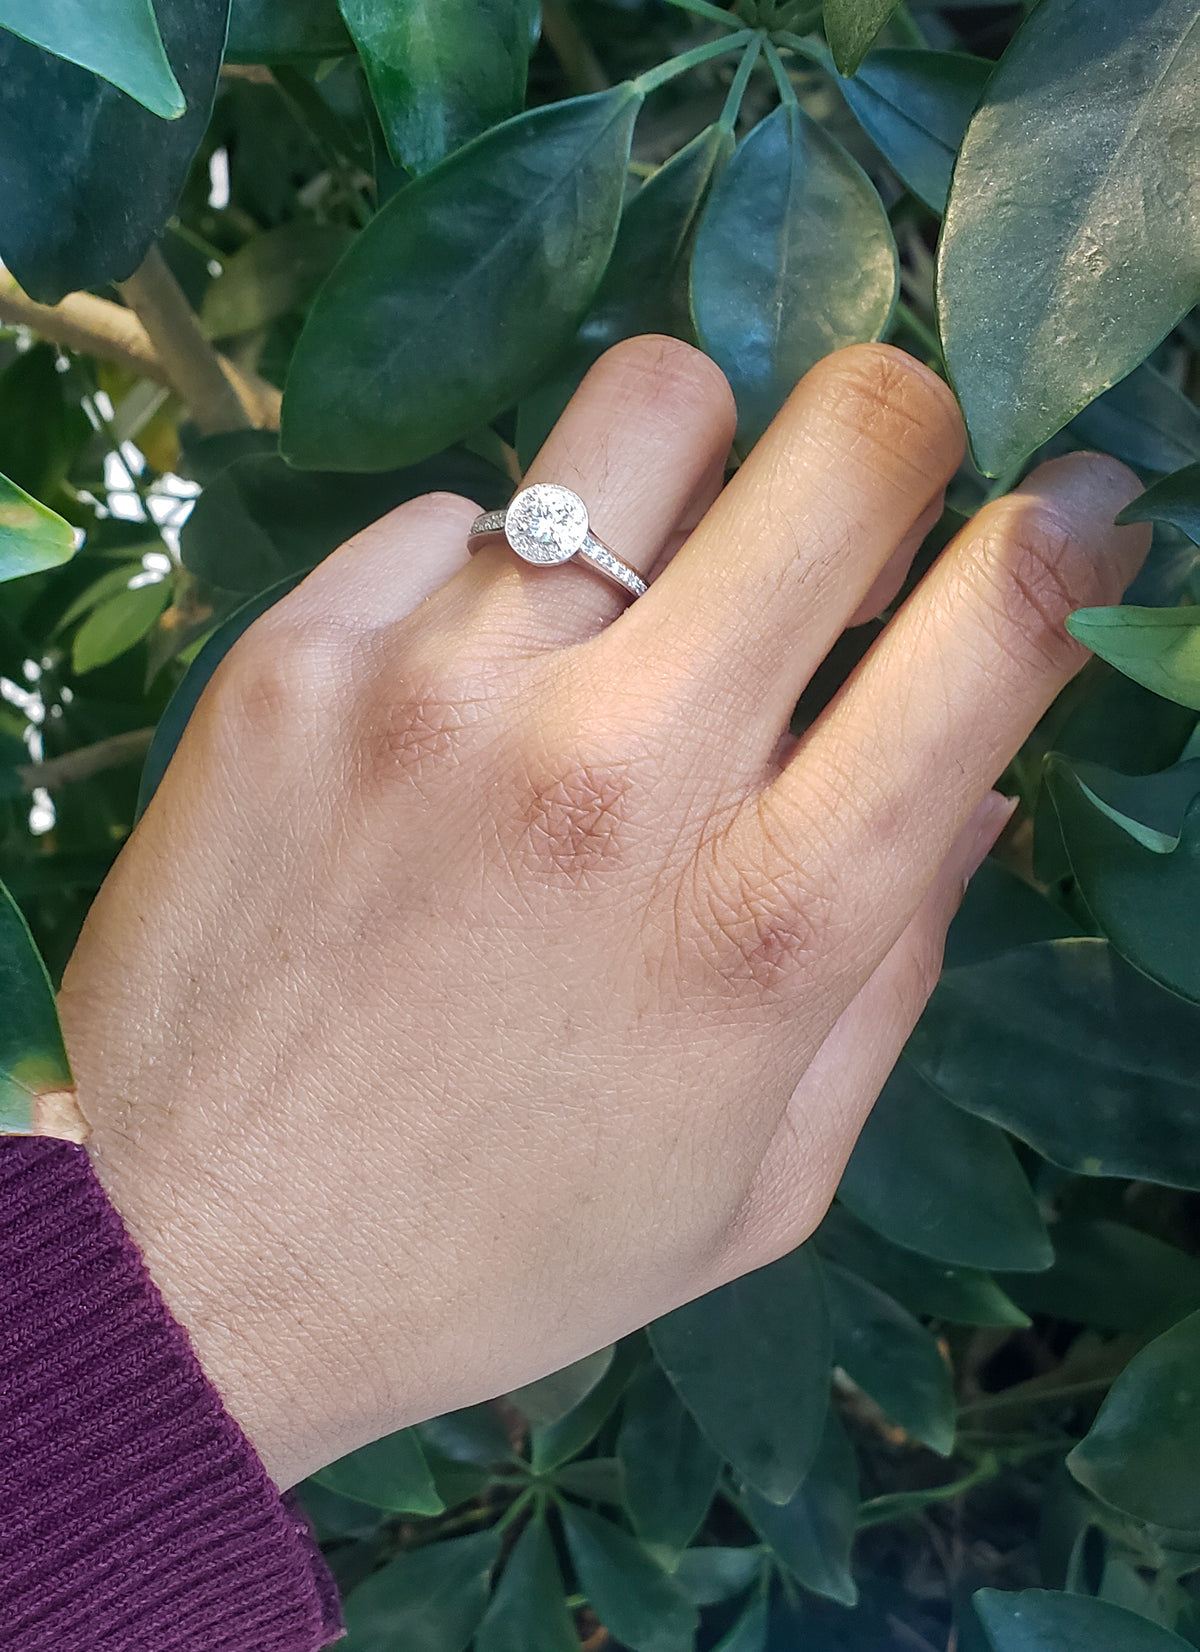 14K White Gold 0.78cttw Diamond Halo Engagement Ring, Size 6.5